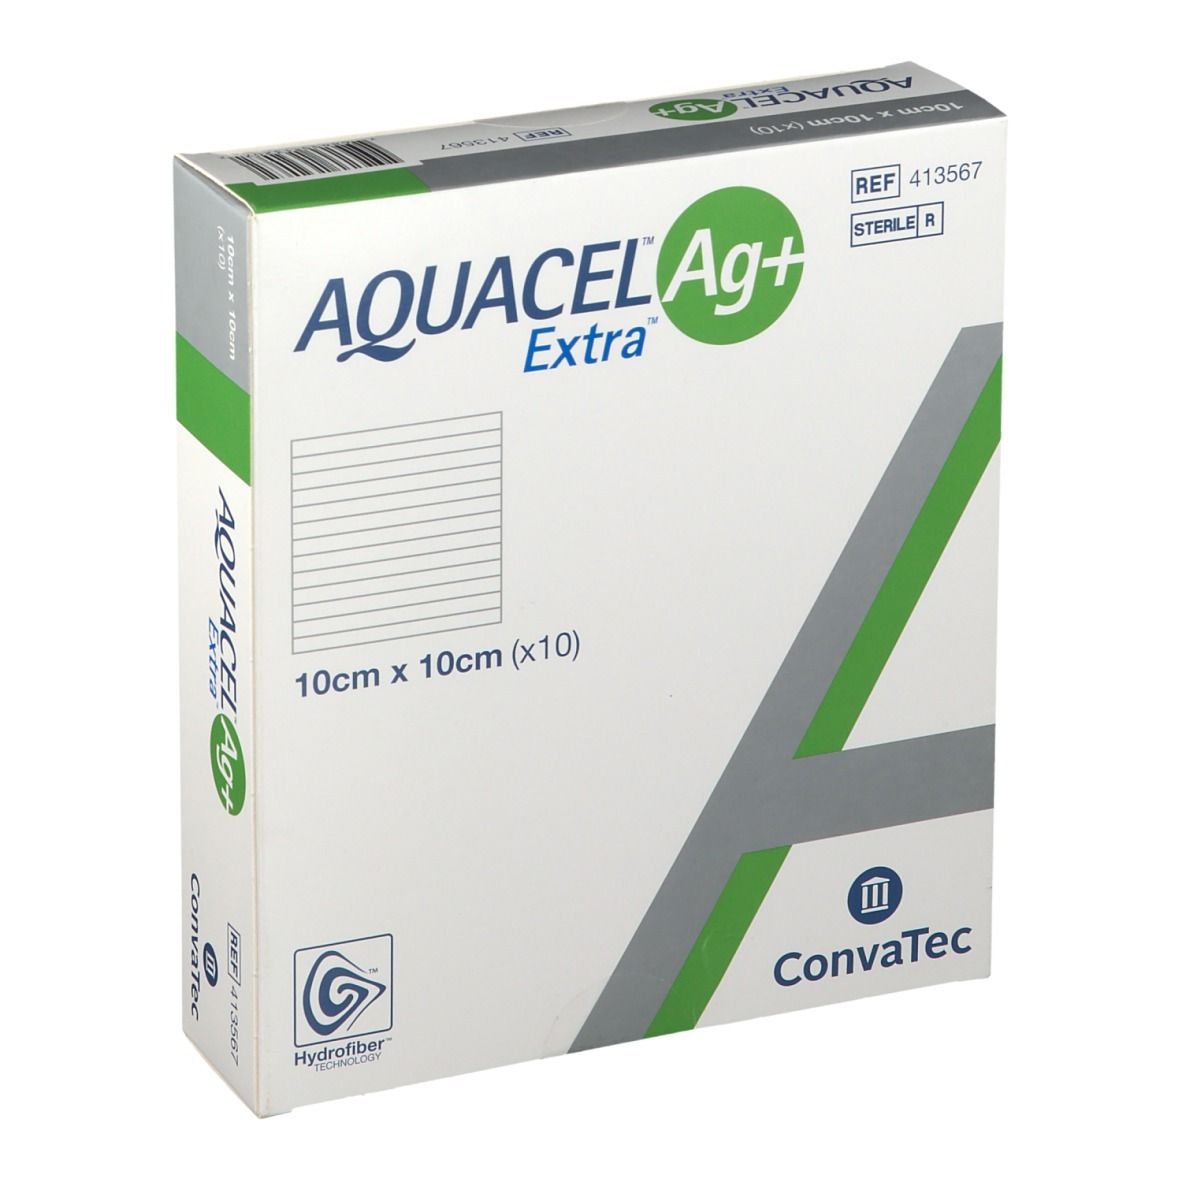 AQUACEL® Ag+ Extra 10 x 10 cm